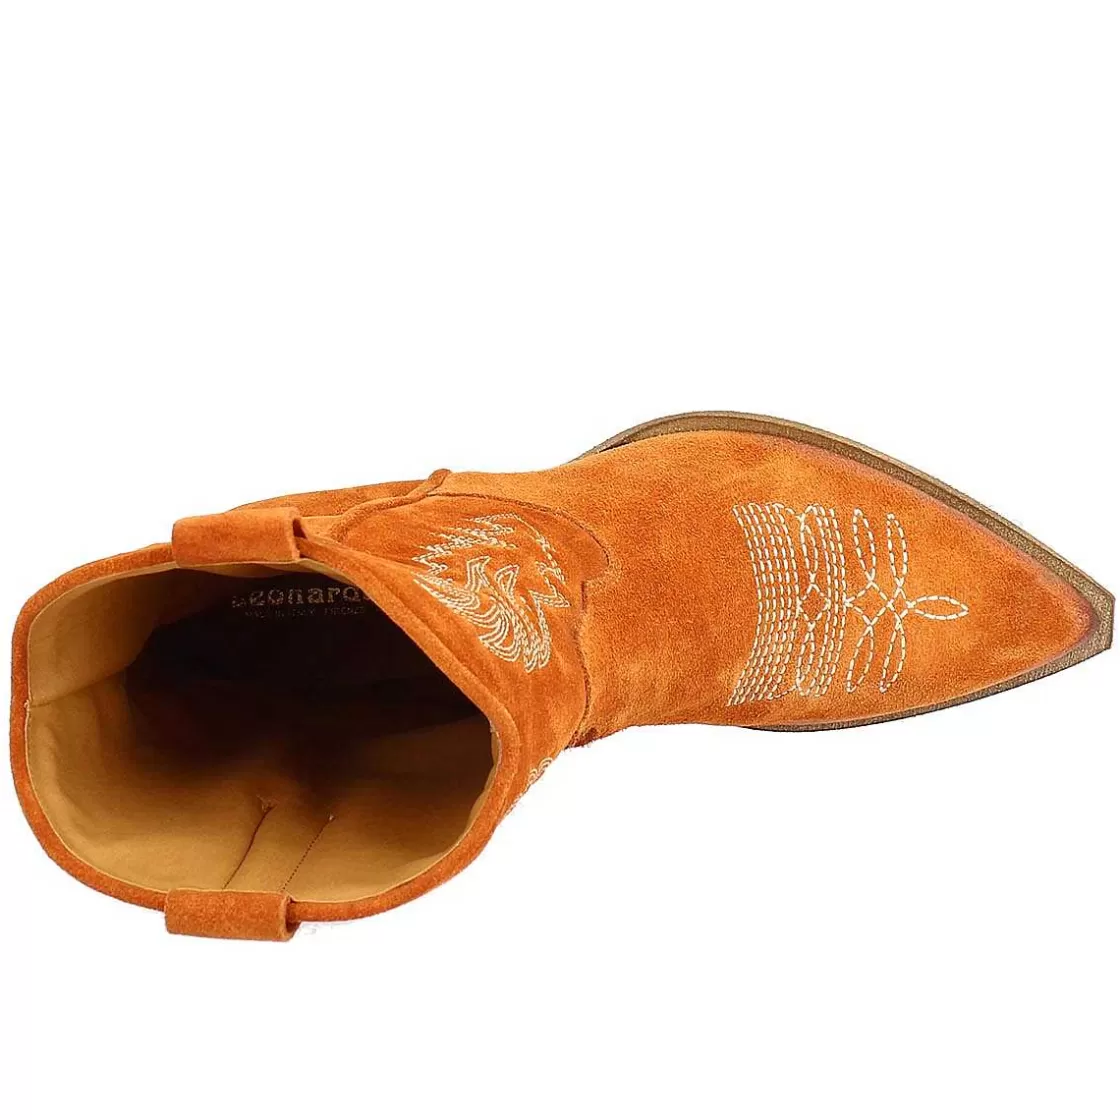 Leonardo Women'S Texan Boot In Orange Suede With Embroidery. Hot